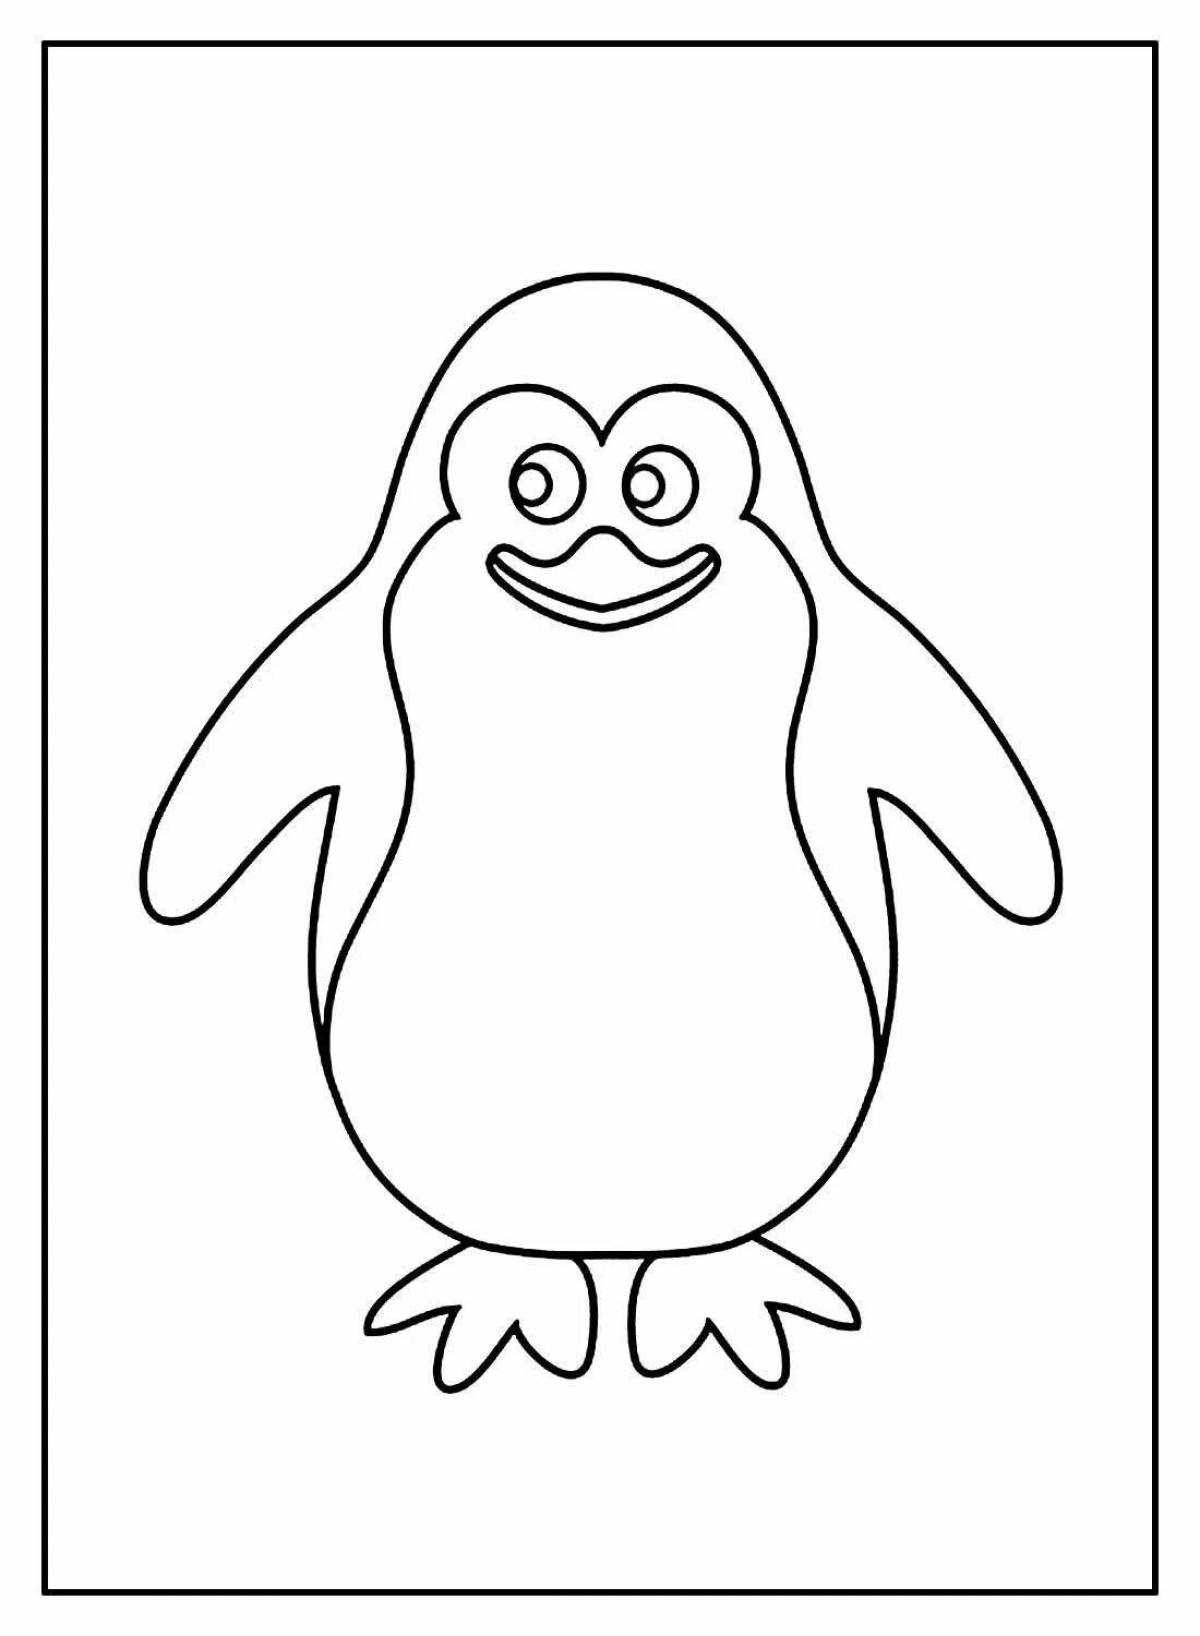 Complex penguin coloring